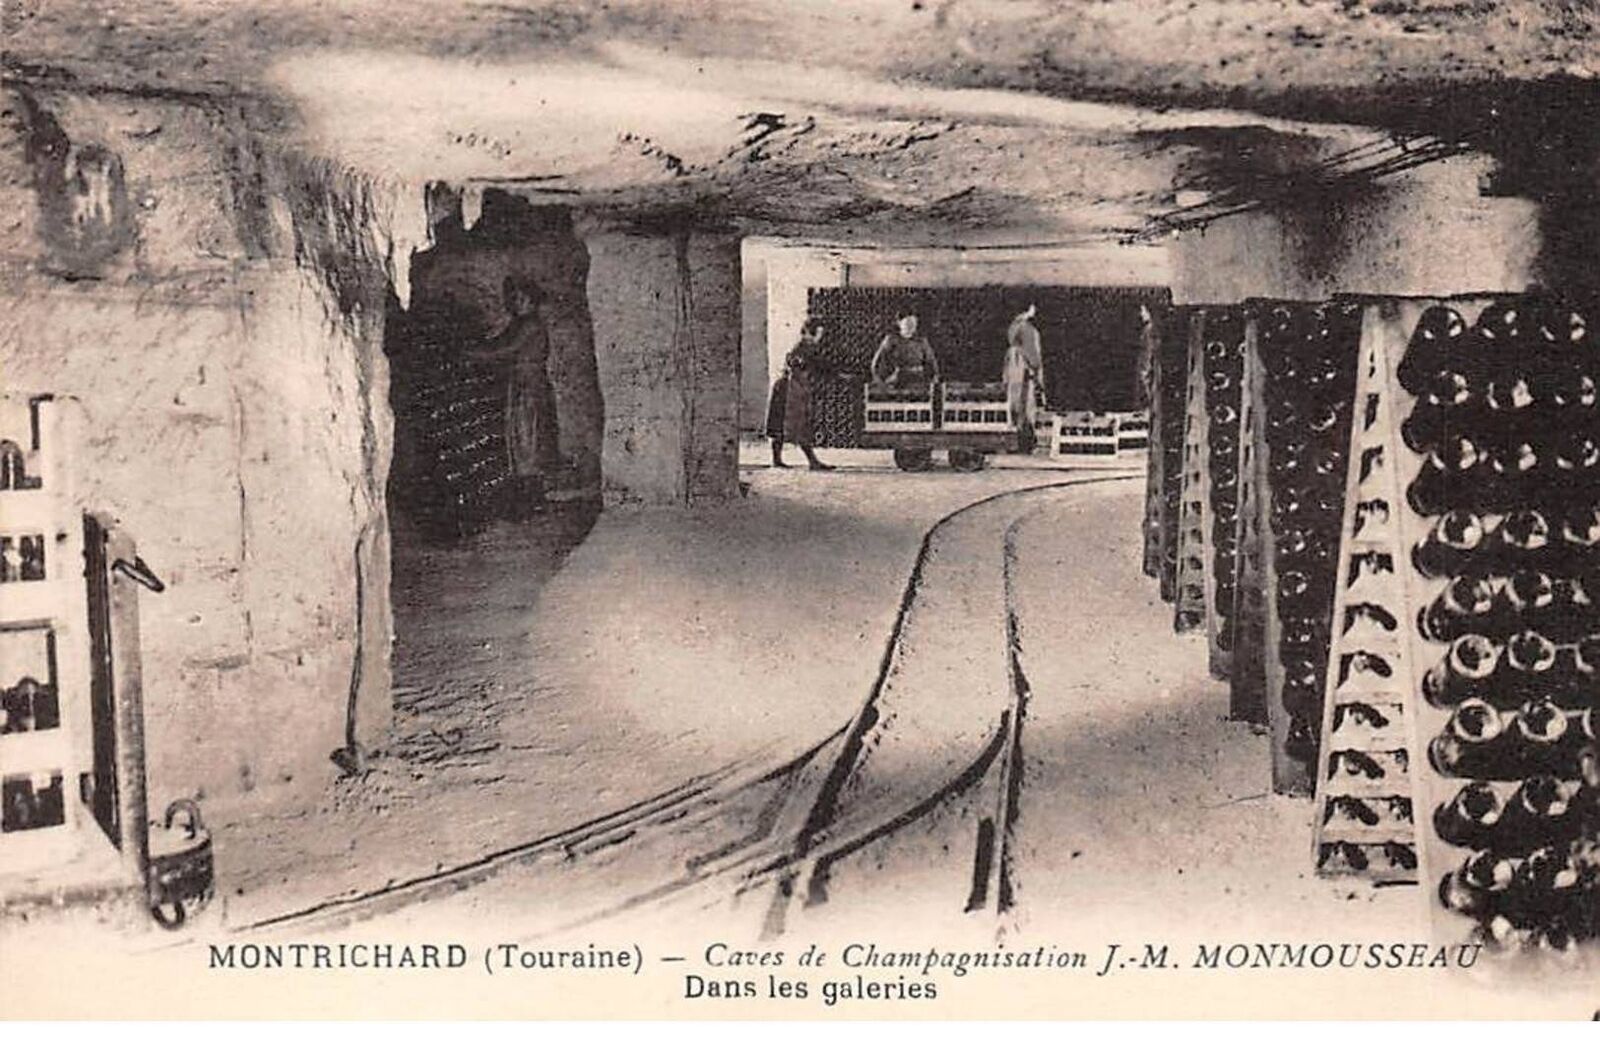 41 - MONTRICHARD - SAN44800 - JM Monmousseau champagnation cellars - in l